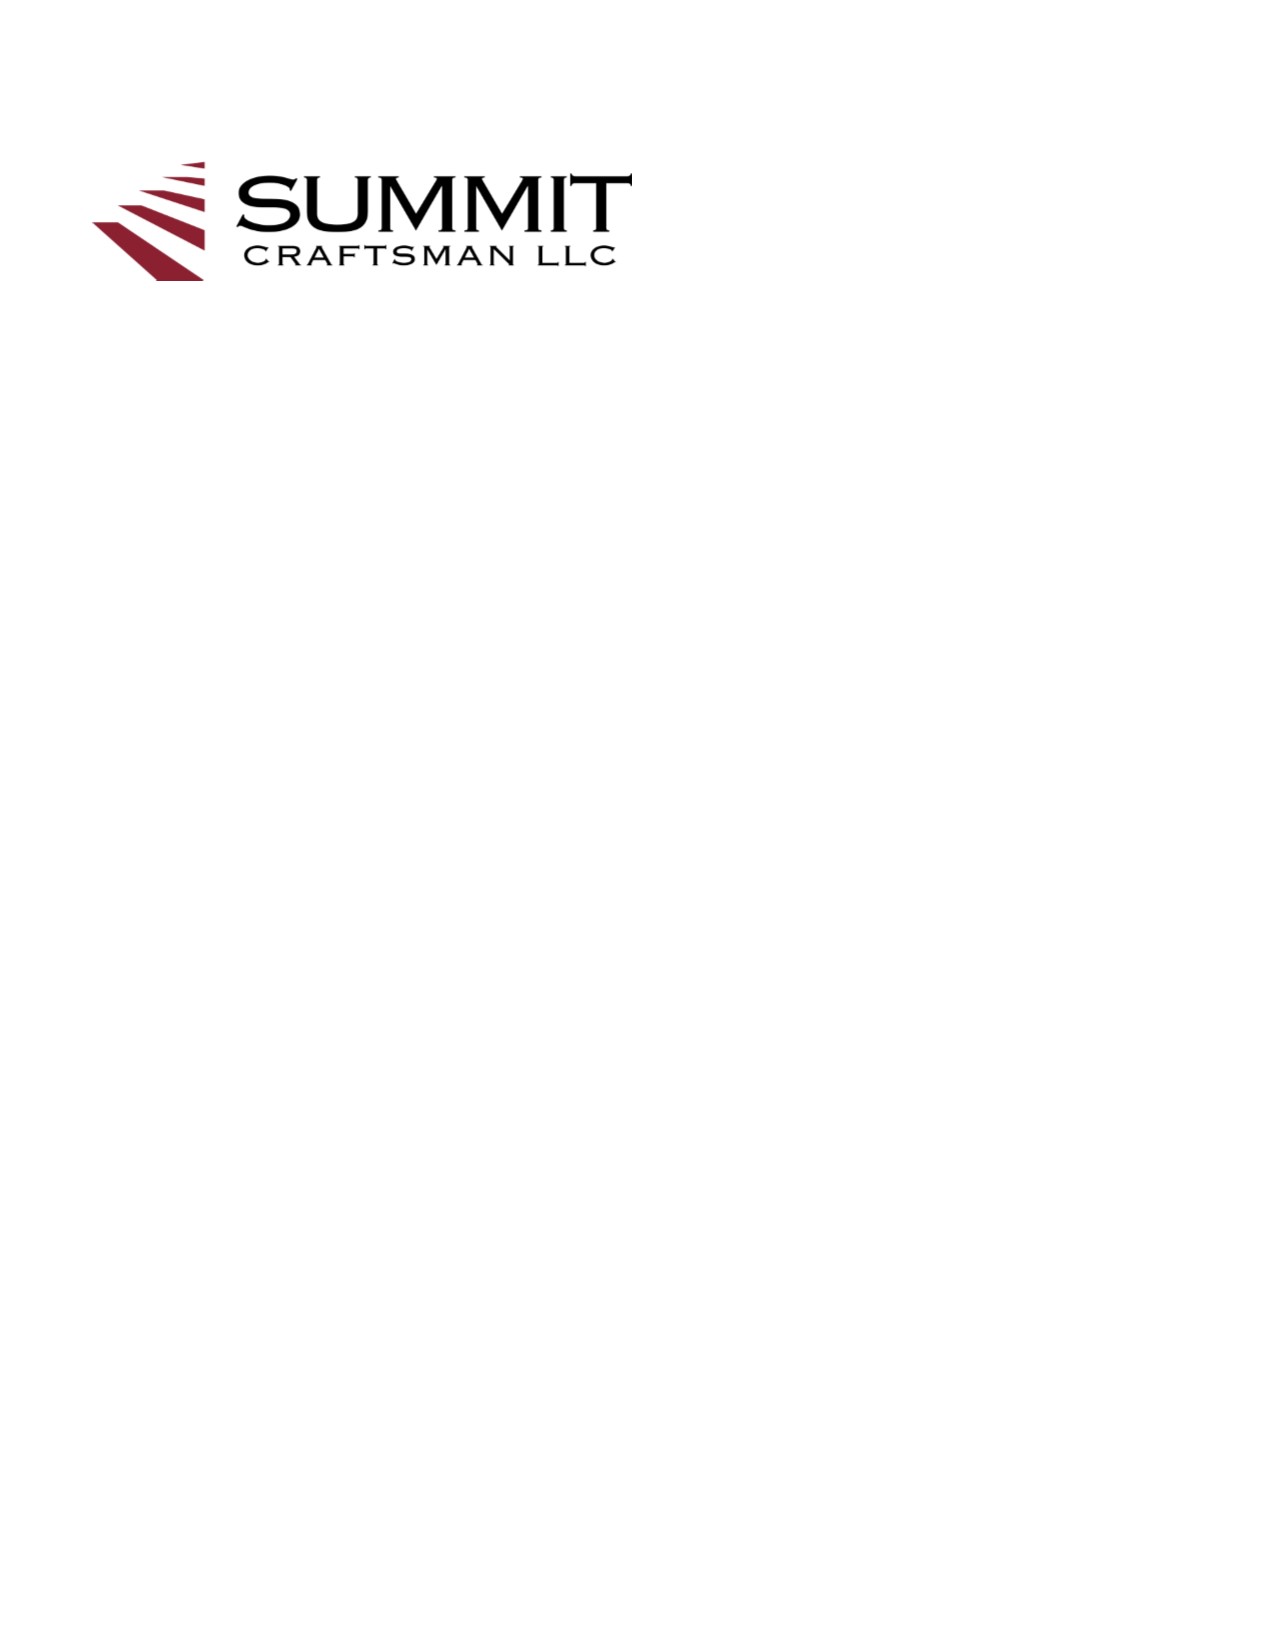 Summit Craftsman, LLC Logo